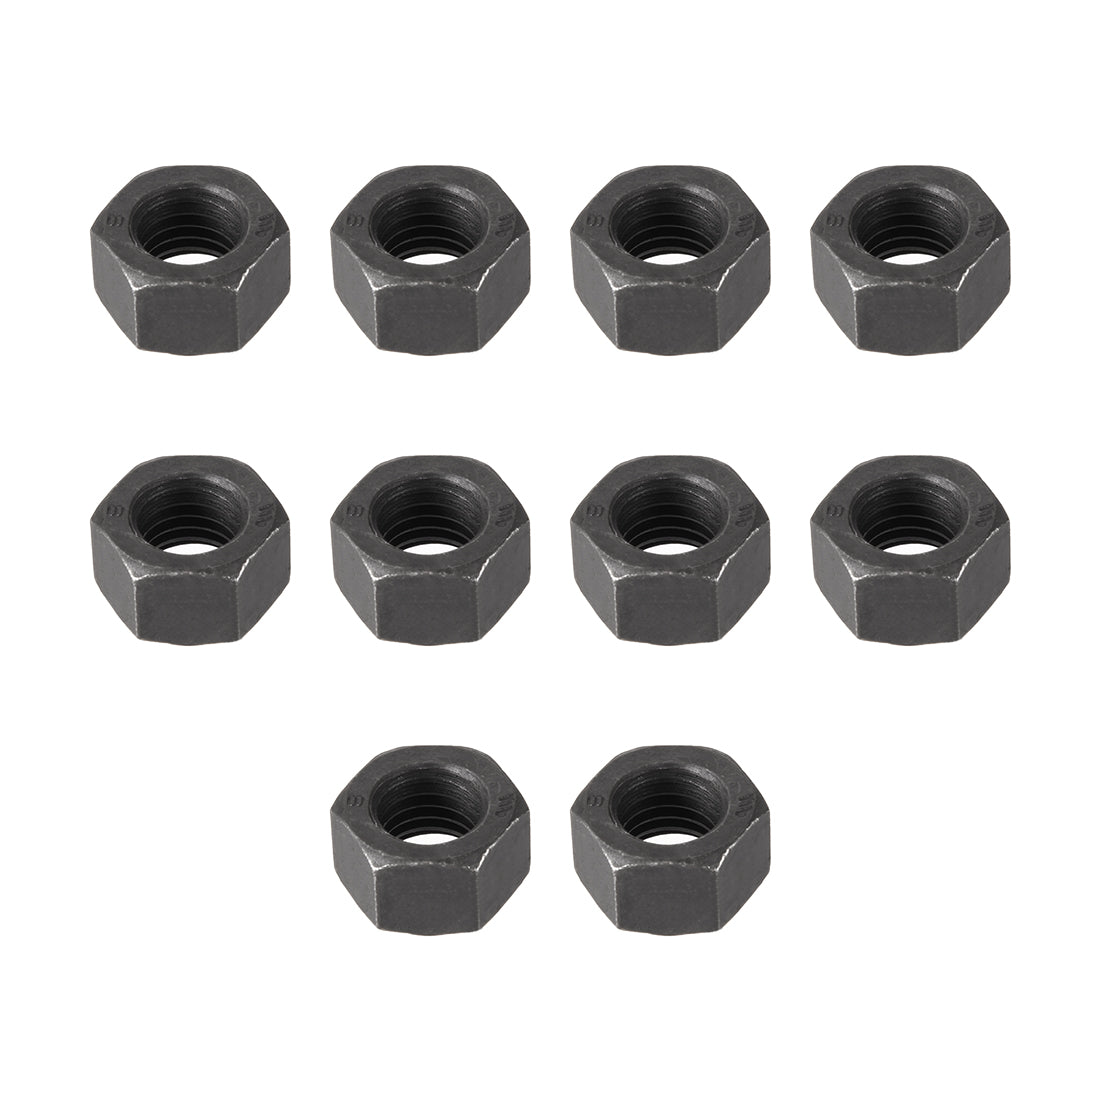 Uxcell Uxcell M10 Metric Carbon Steel Grade 8.8 Hexagon Hex Nut Black 10pcs